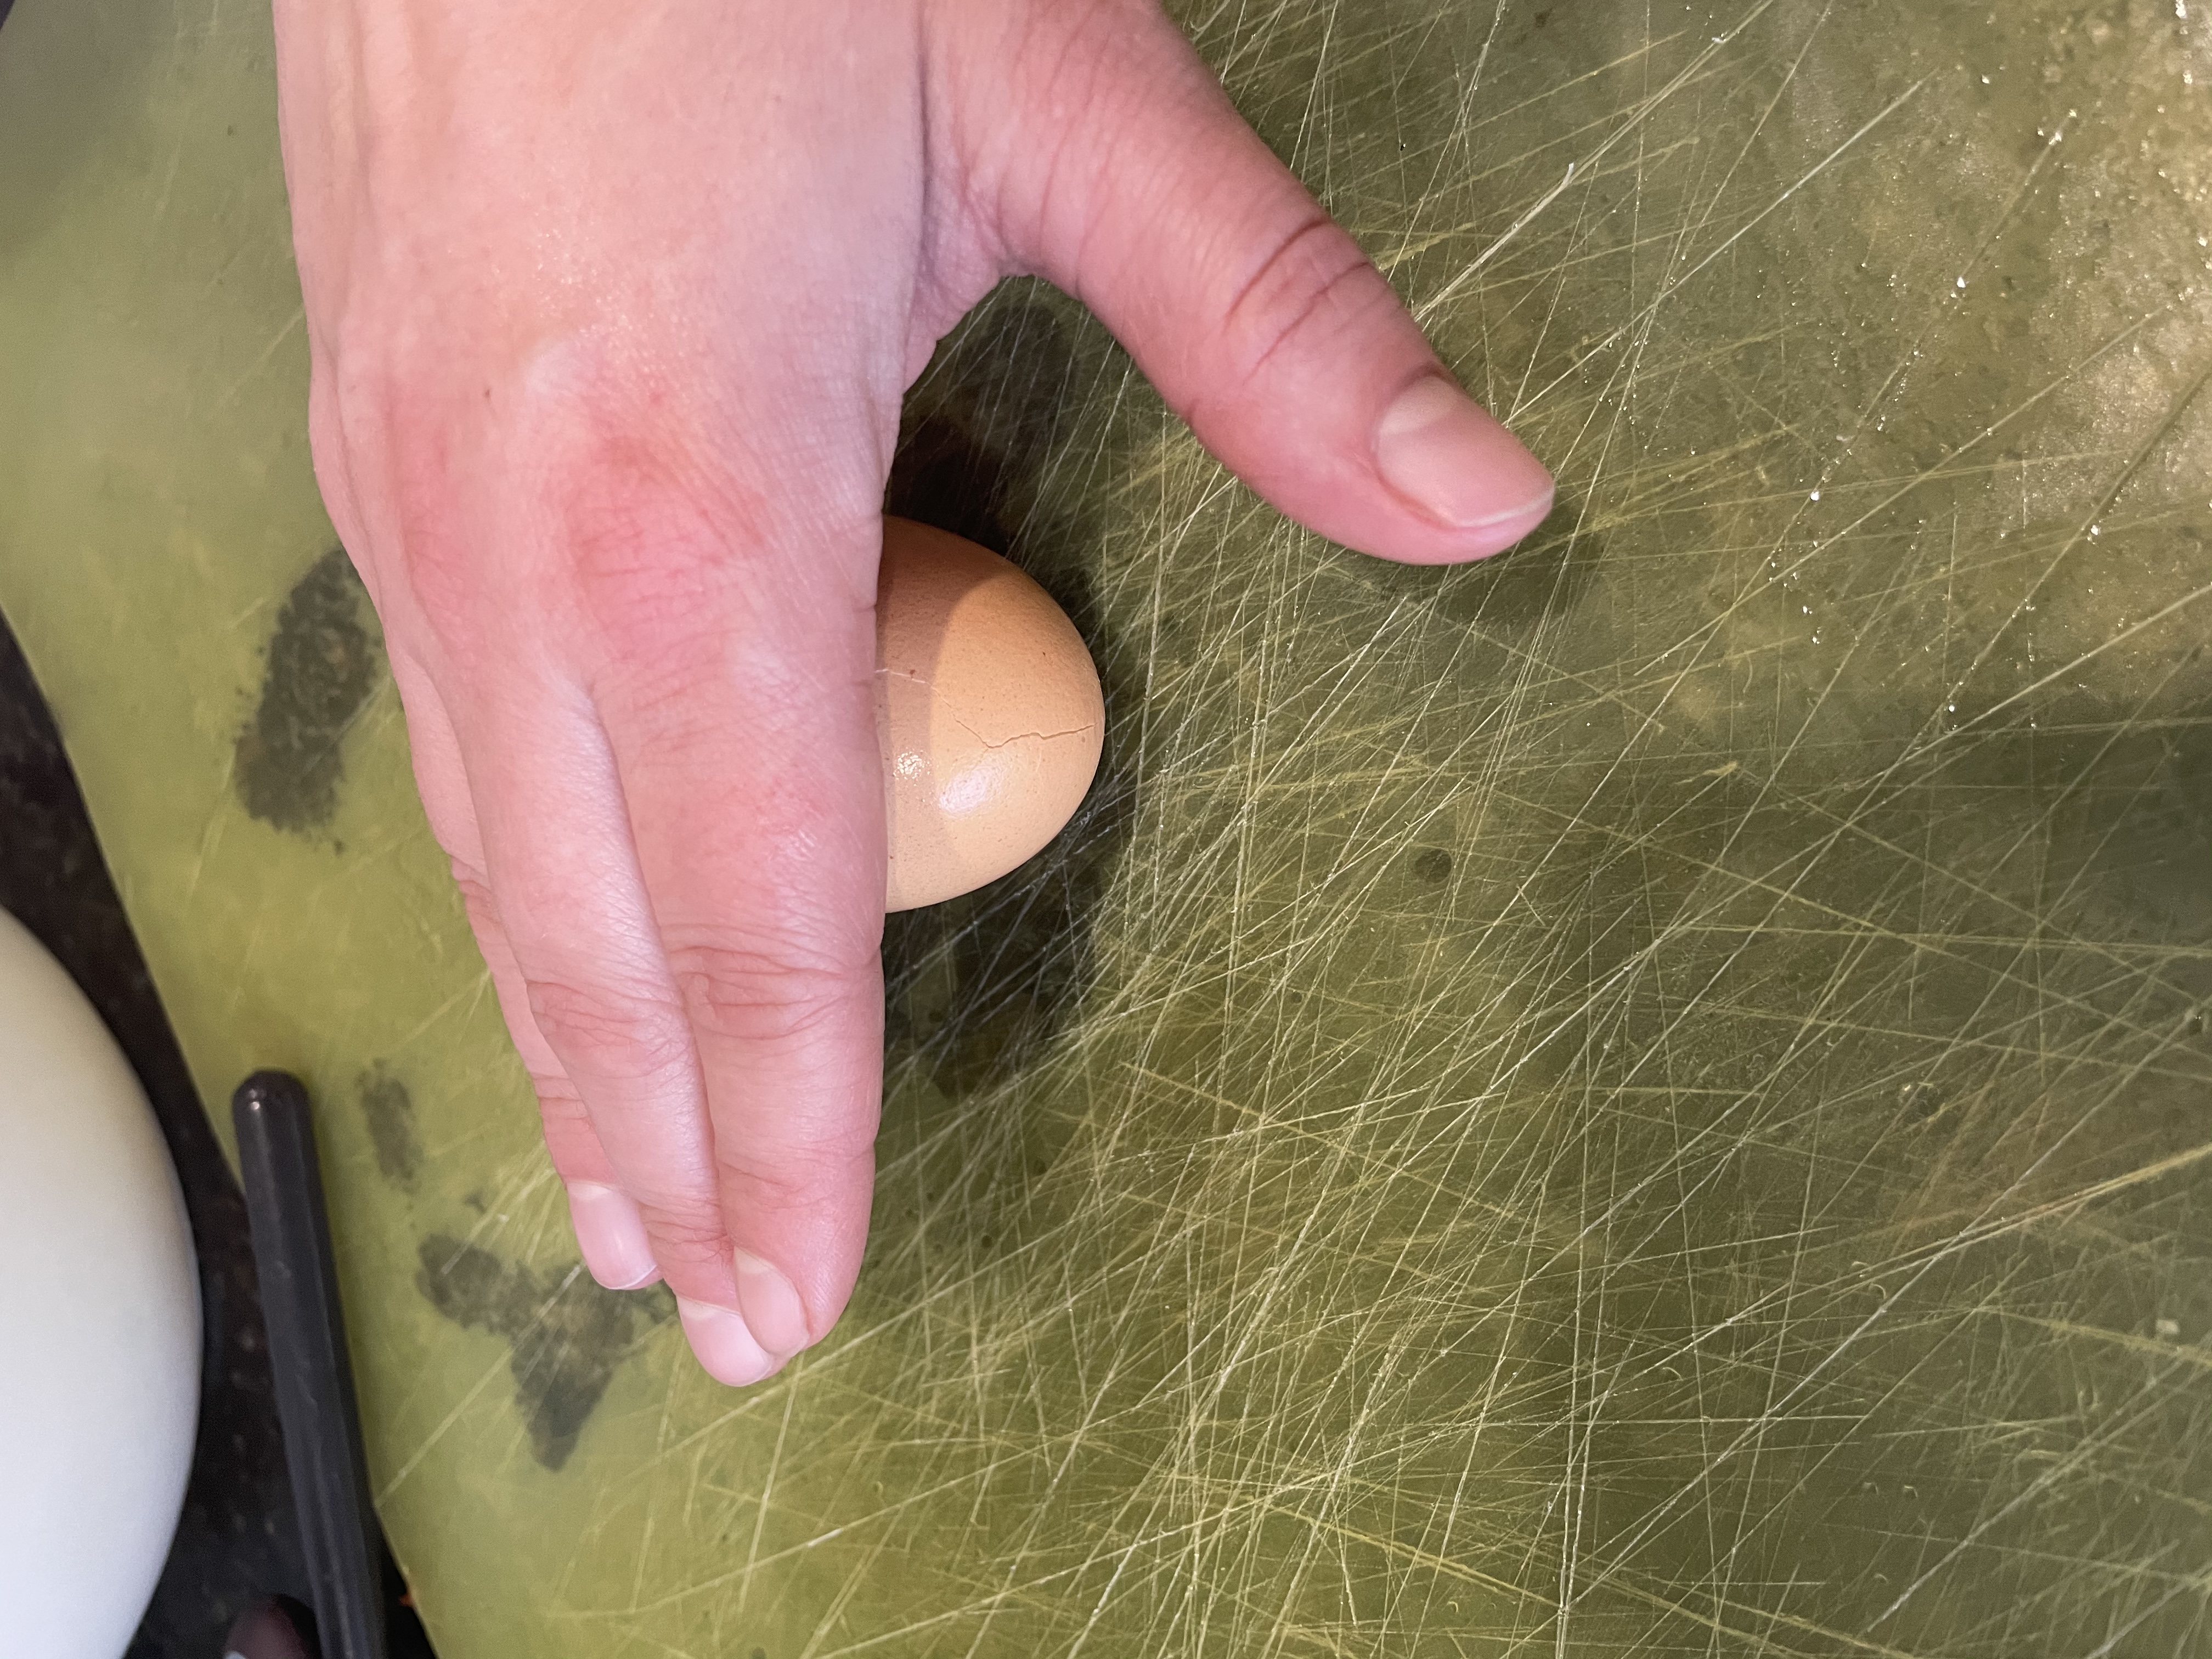 Cracking hard boiled egg